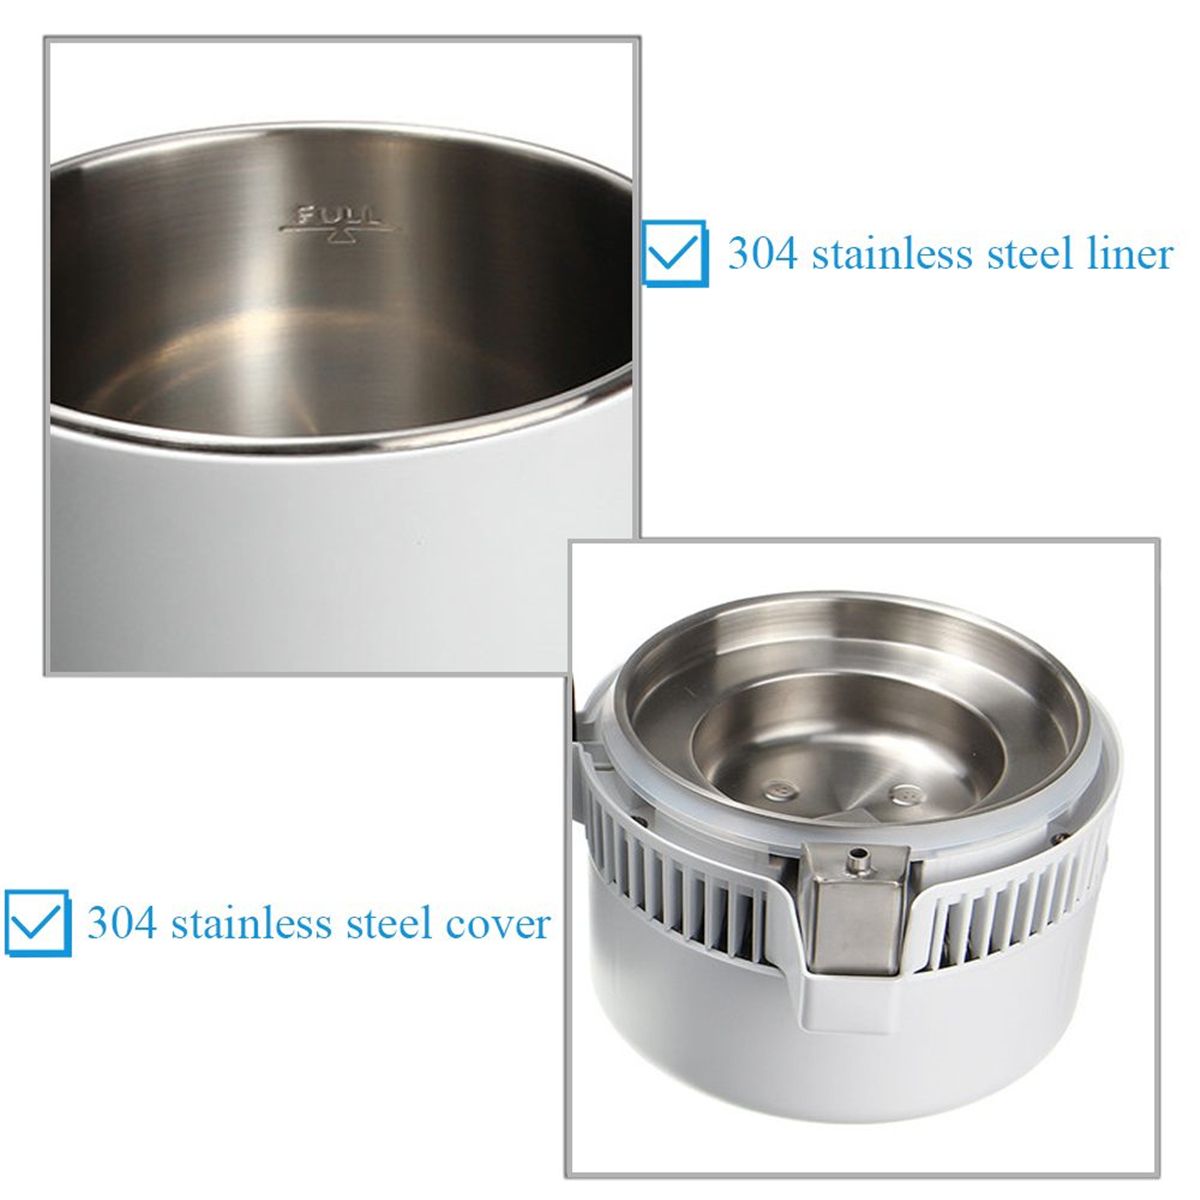 4L-750W-Water-Distiller-Pure-Purifier-Filter-110220V-304-Stainless-Steel-Filter-1696547